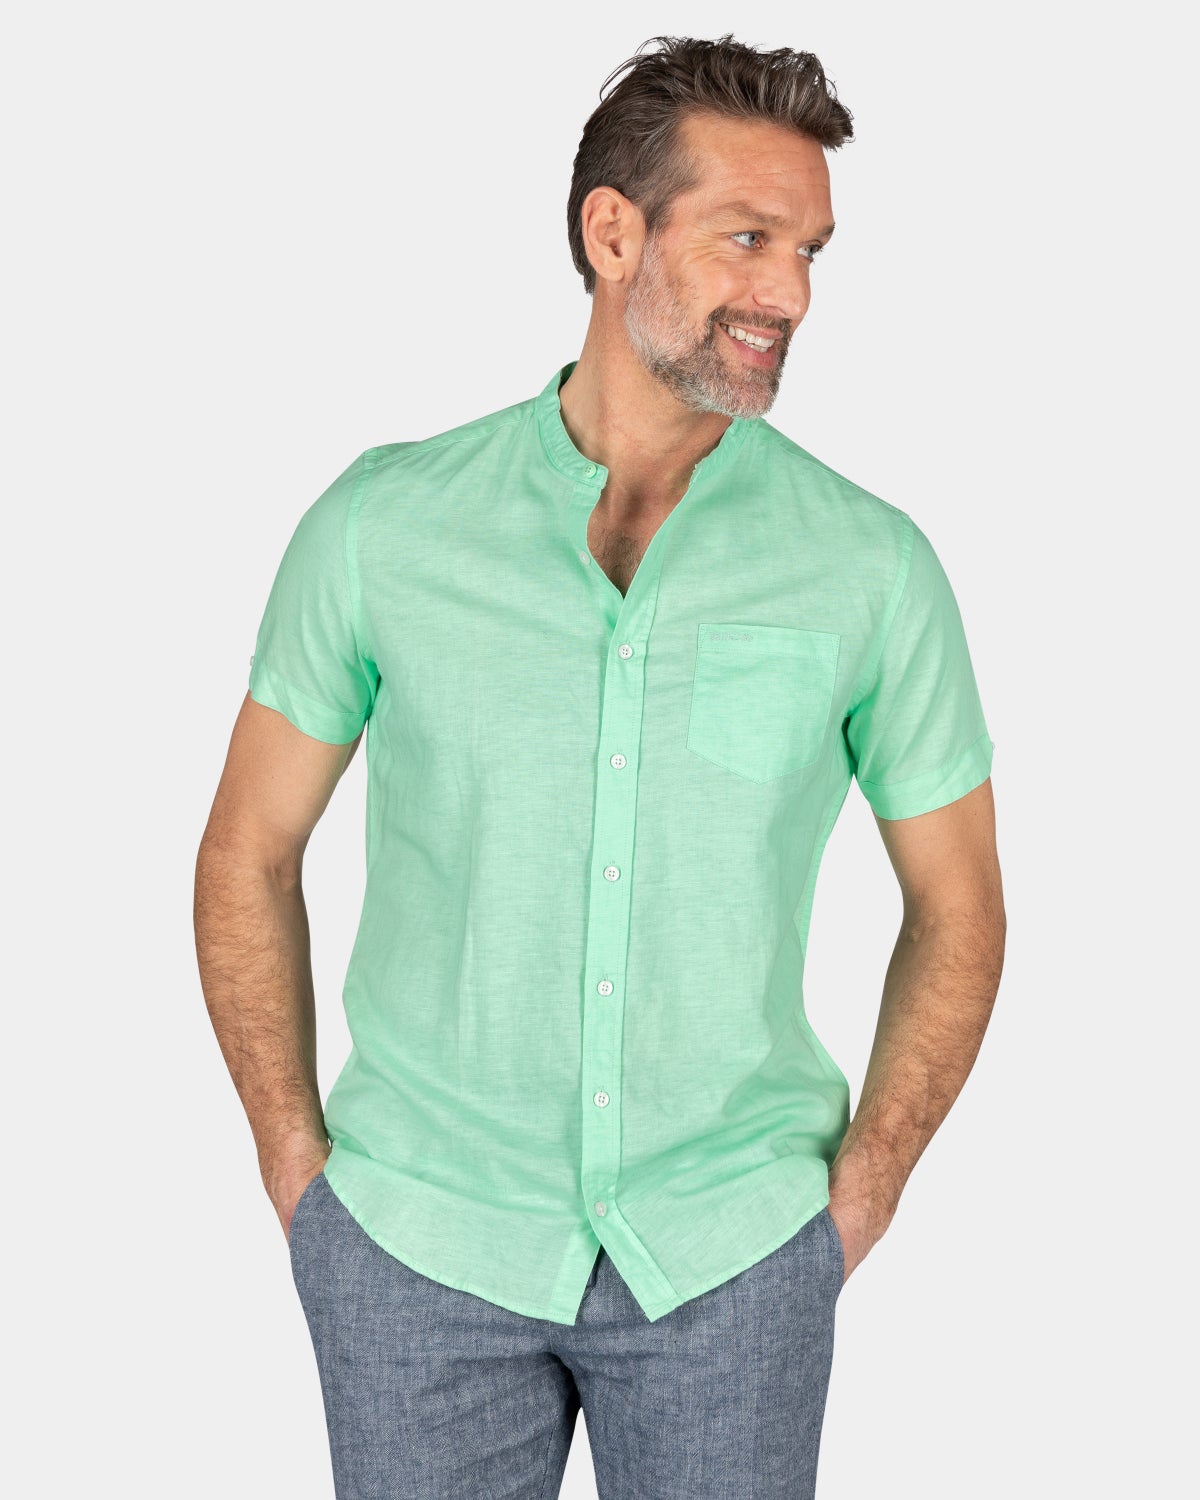 Plain shirt short sleeves - Teal Green